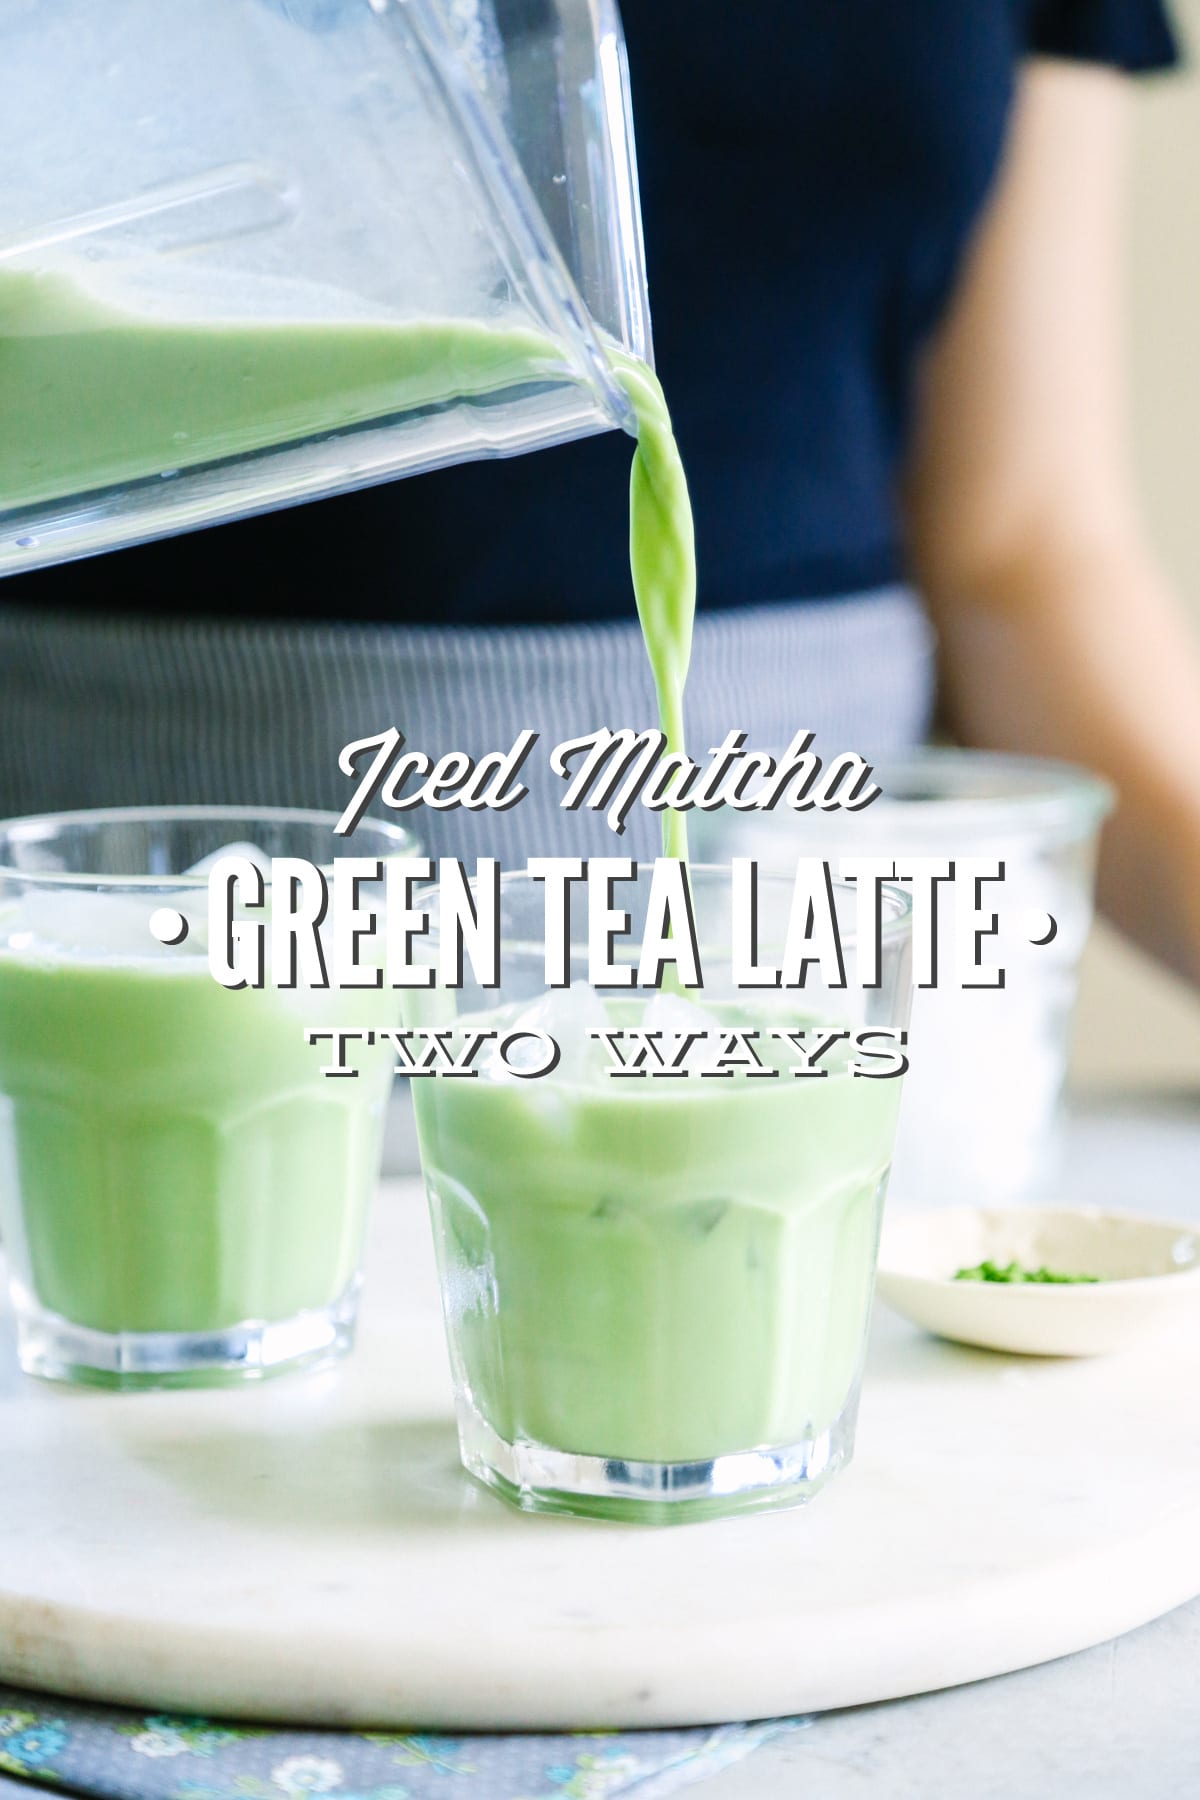 Iced Matcha Green Tea “Latte:” Two Ways